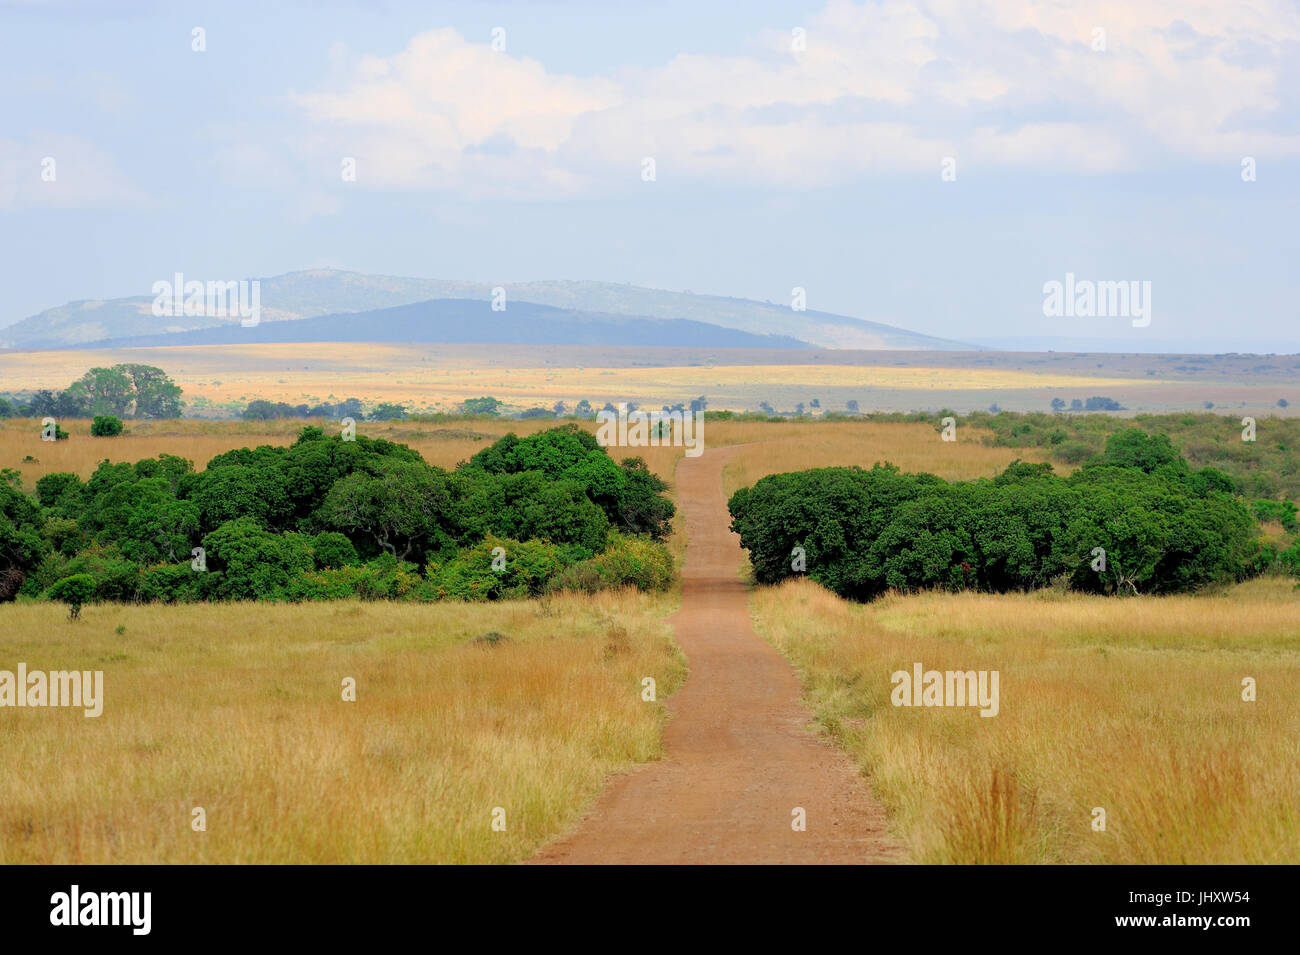 Savannah landscape in the National park of Kenya, Africa Stock Photo